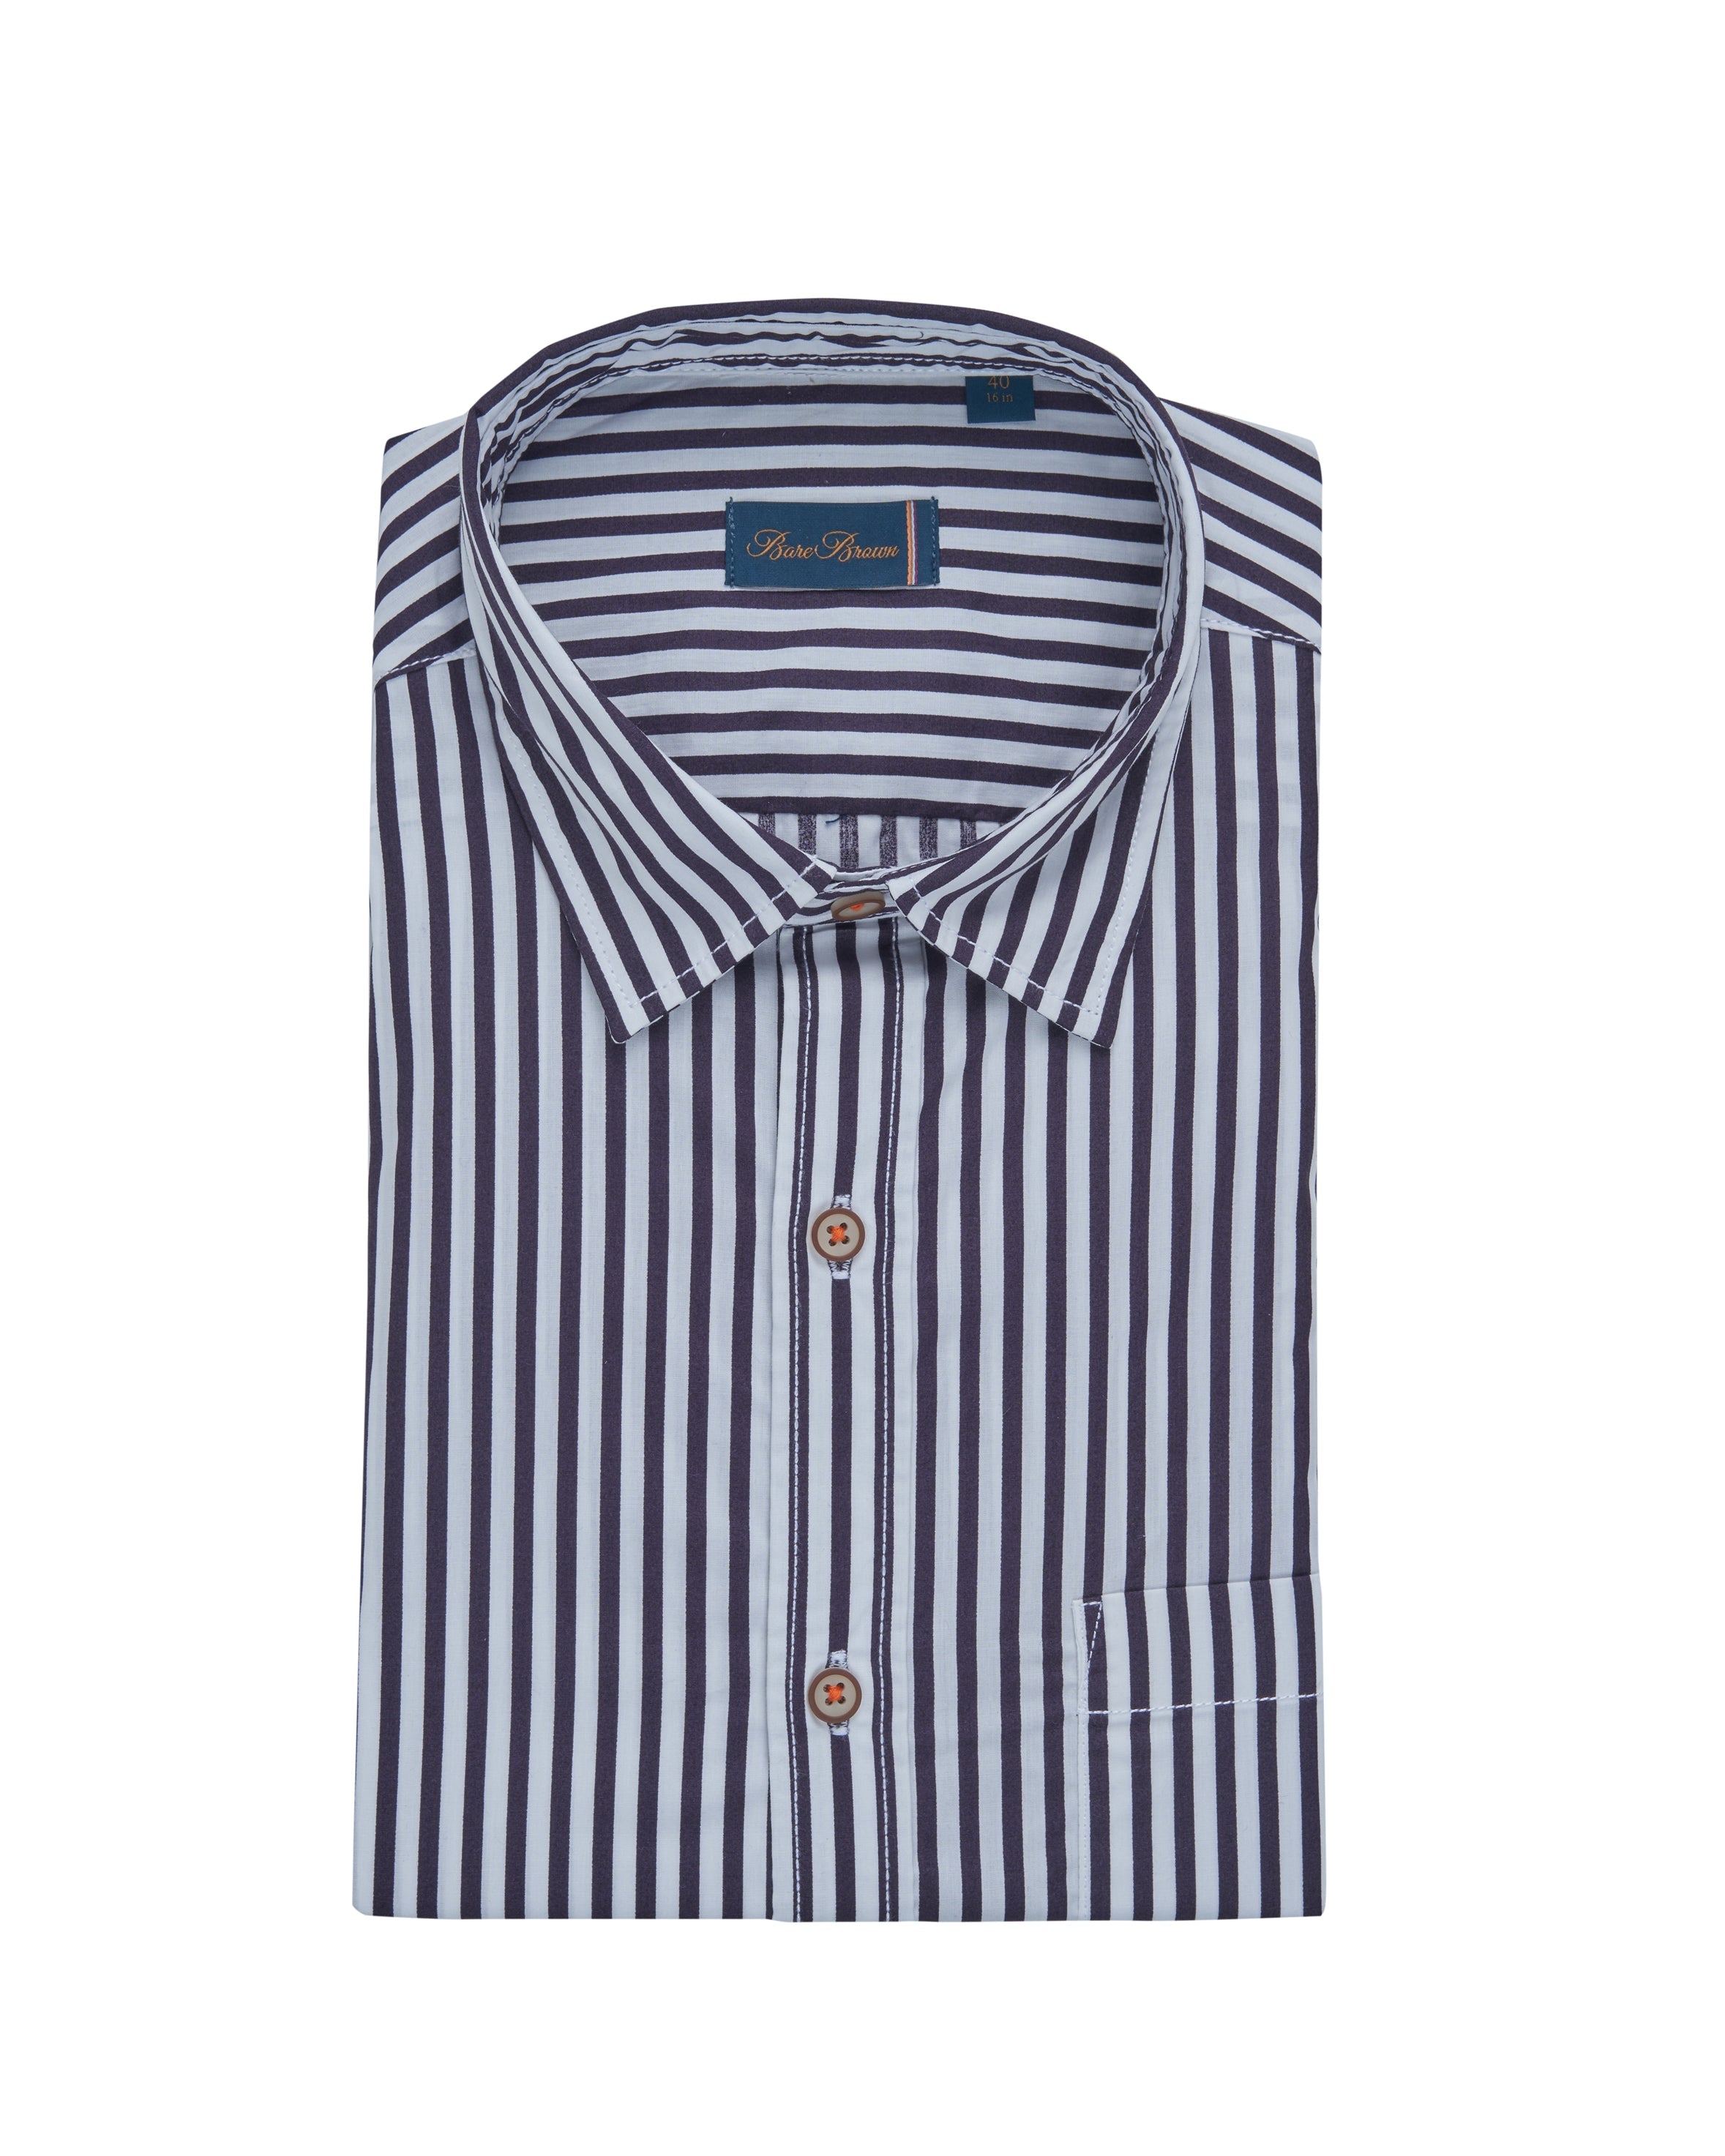 Bare Brown - Navy Stripe Shirt, Slim Fit